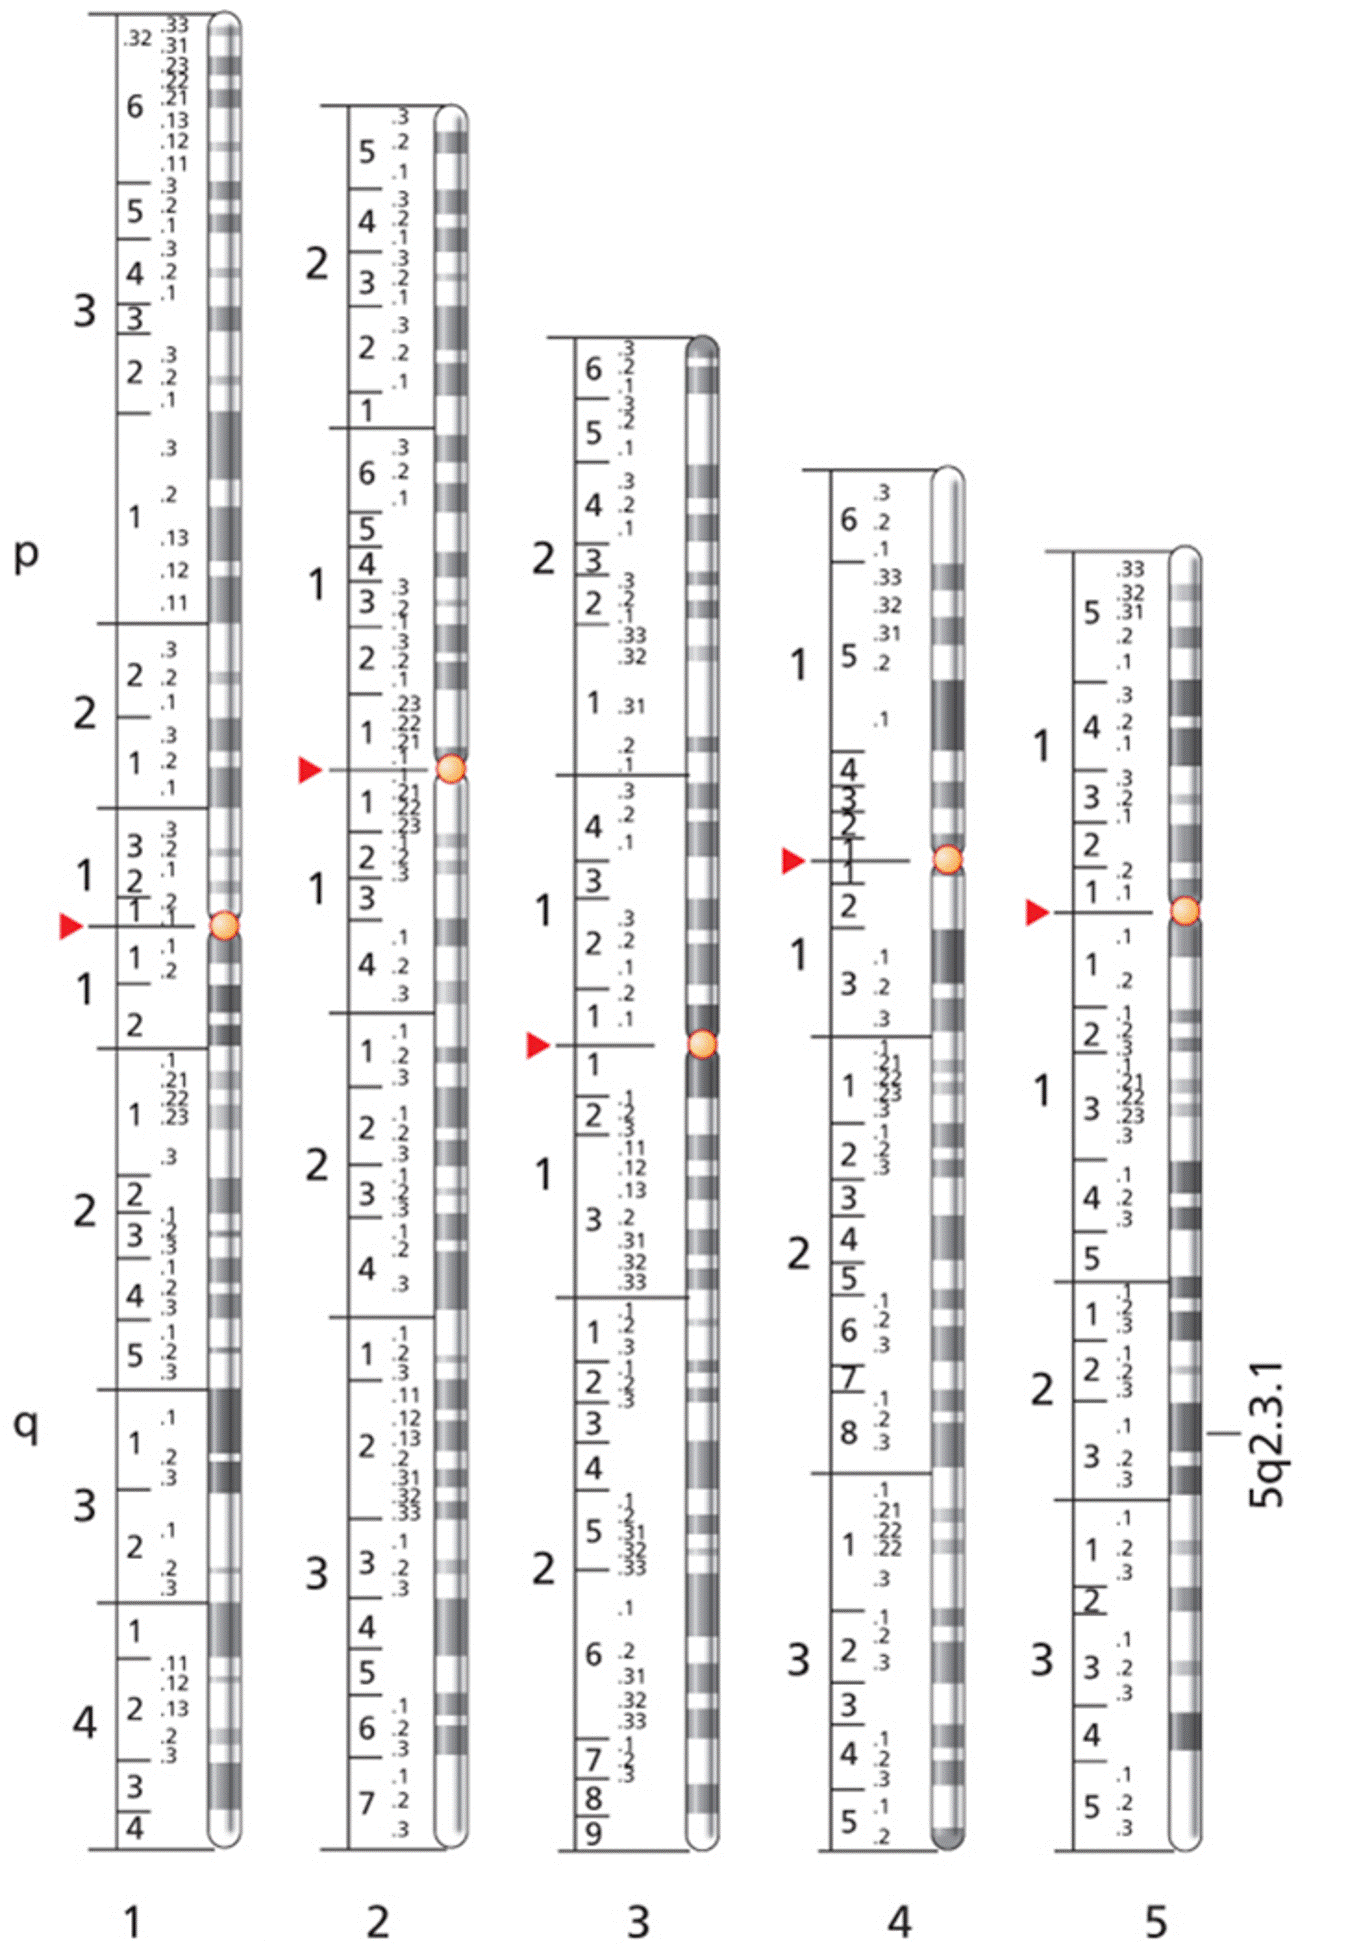 Standardized human chromosome banding patterns